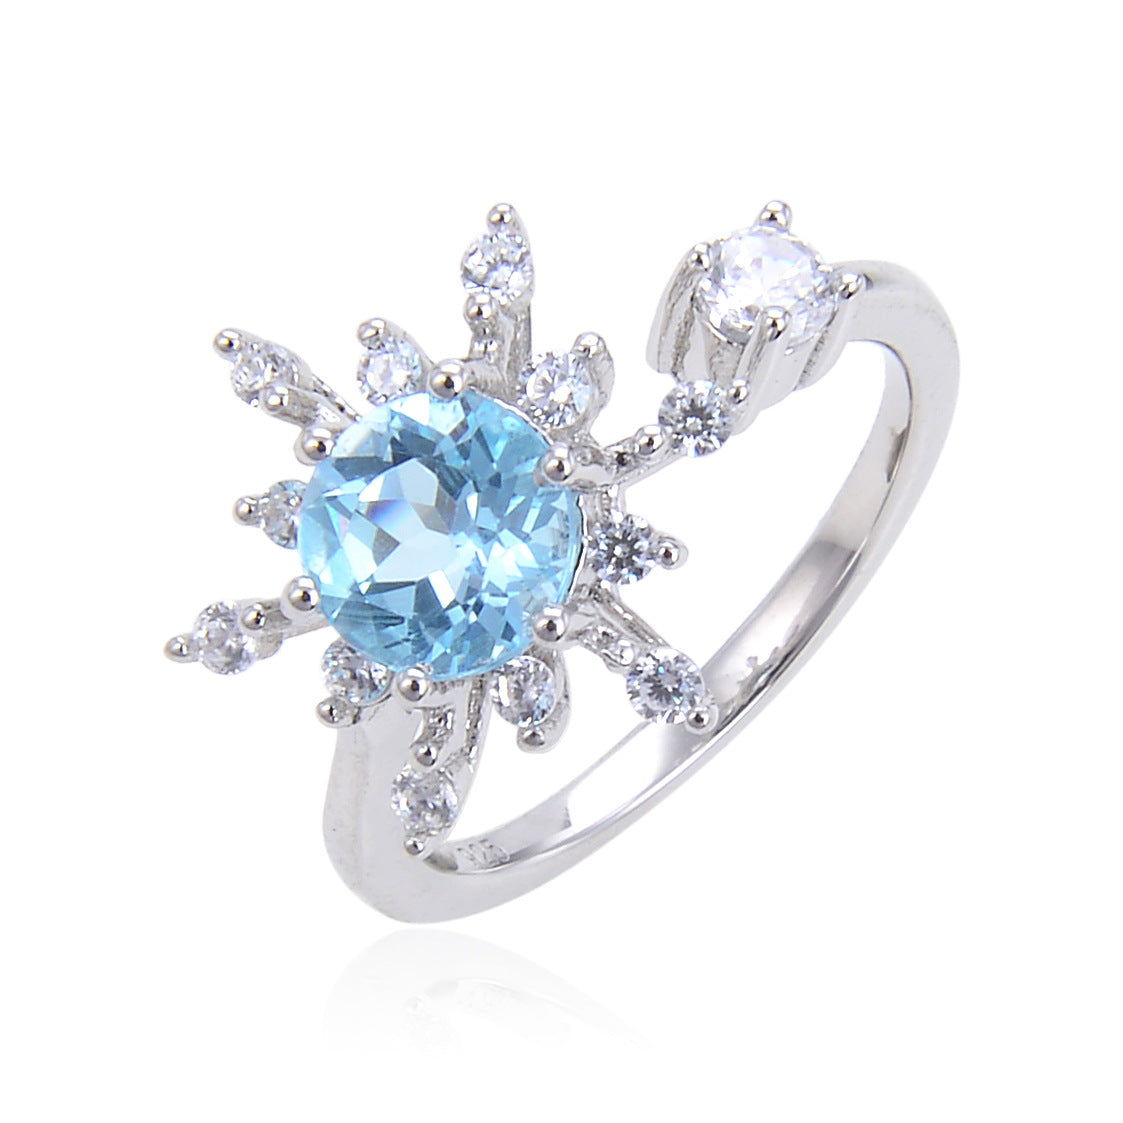 Adjustable Opening Design Natural Gemstone Sun Shape Silver Ring for Women